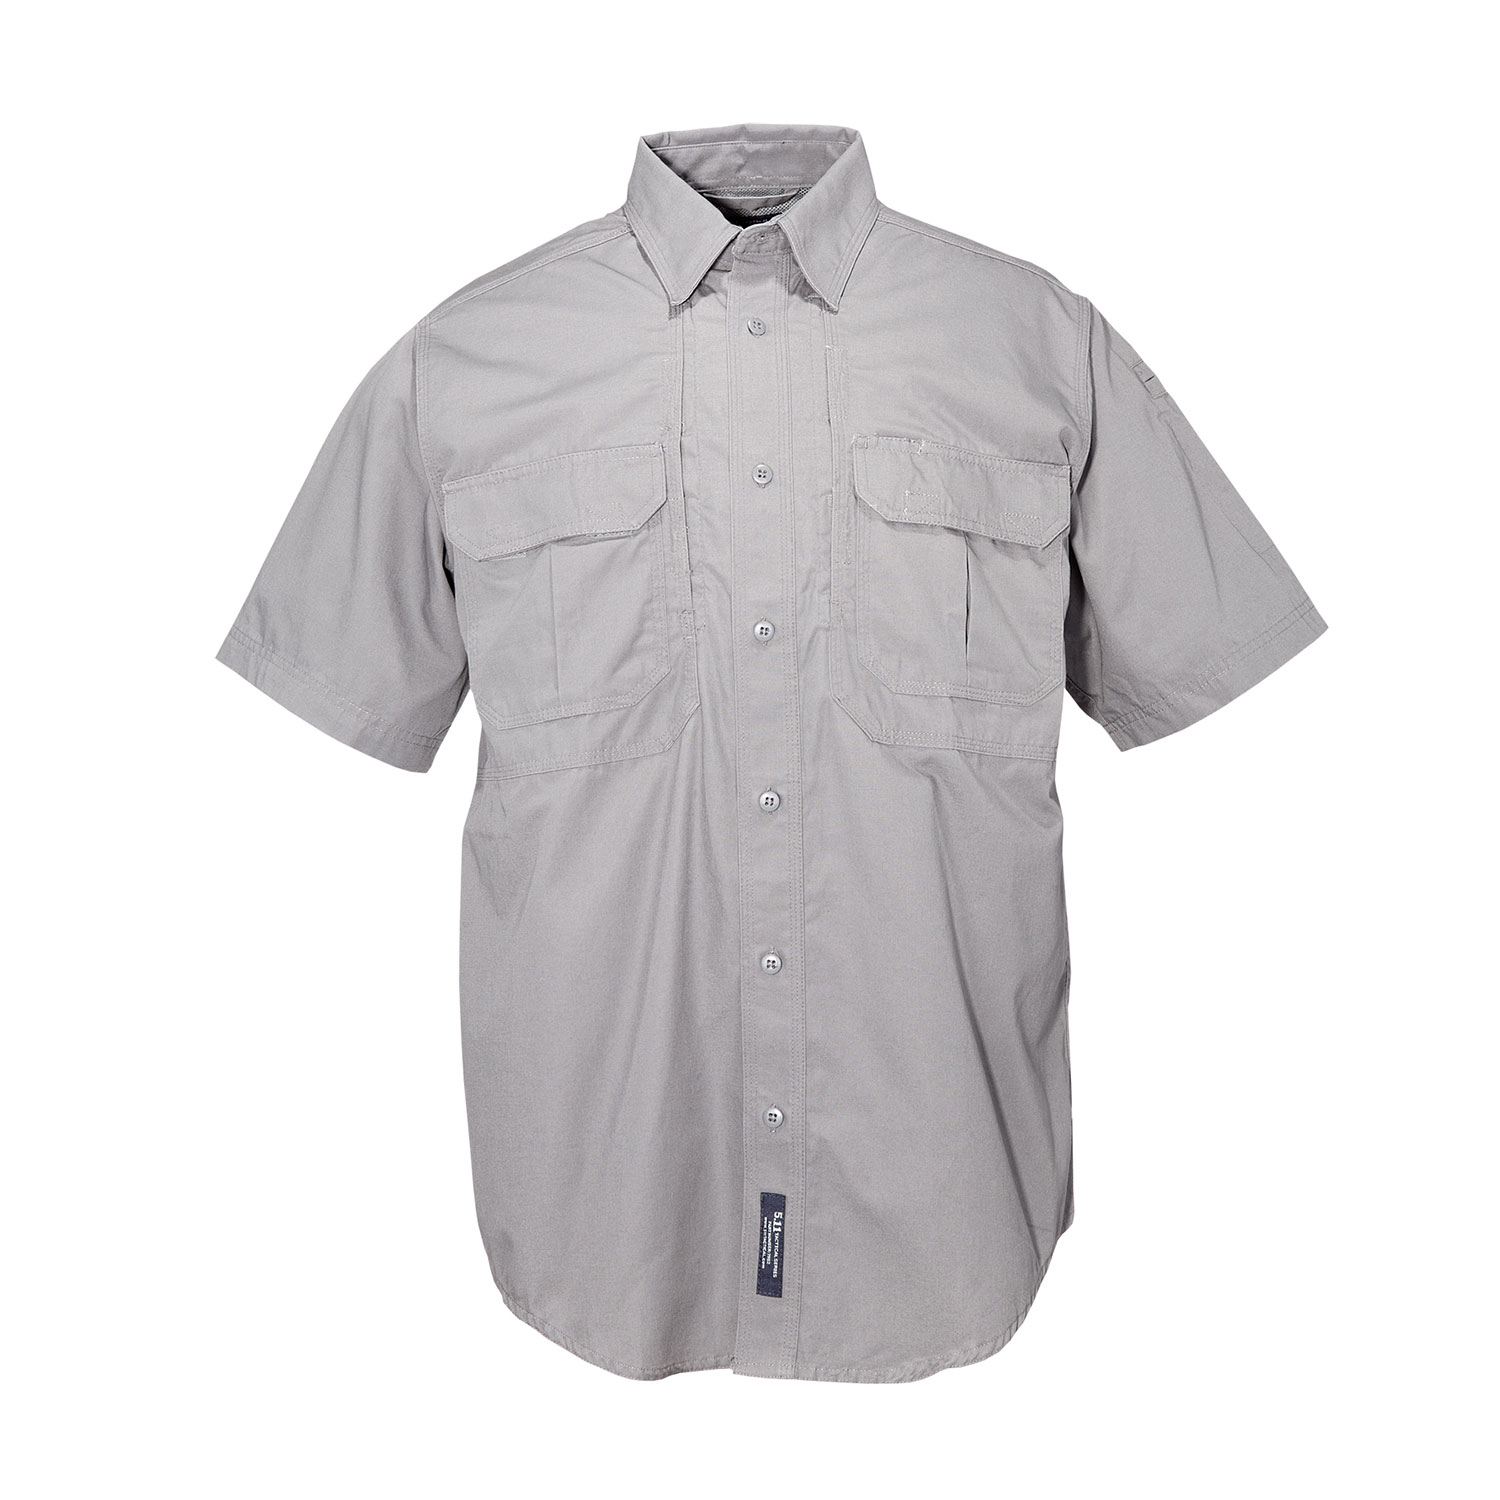 5.11 Tactical Cotton Canvas Short Sleeve Shirt